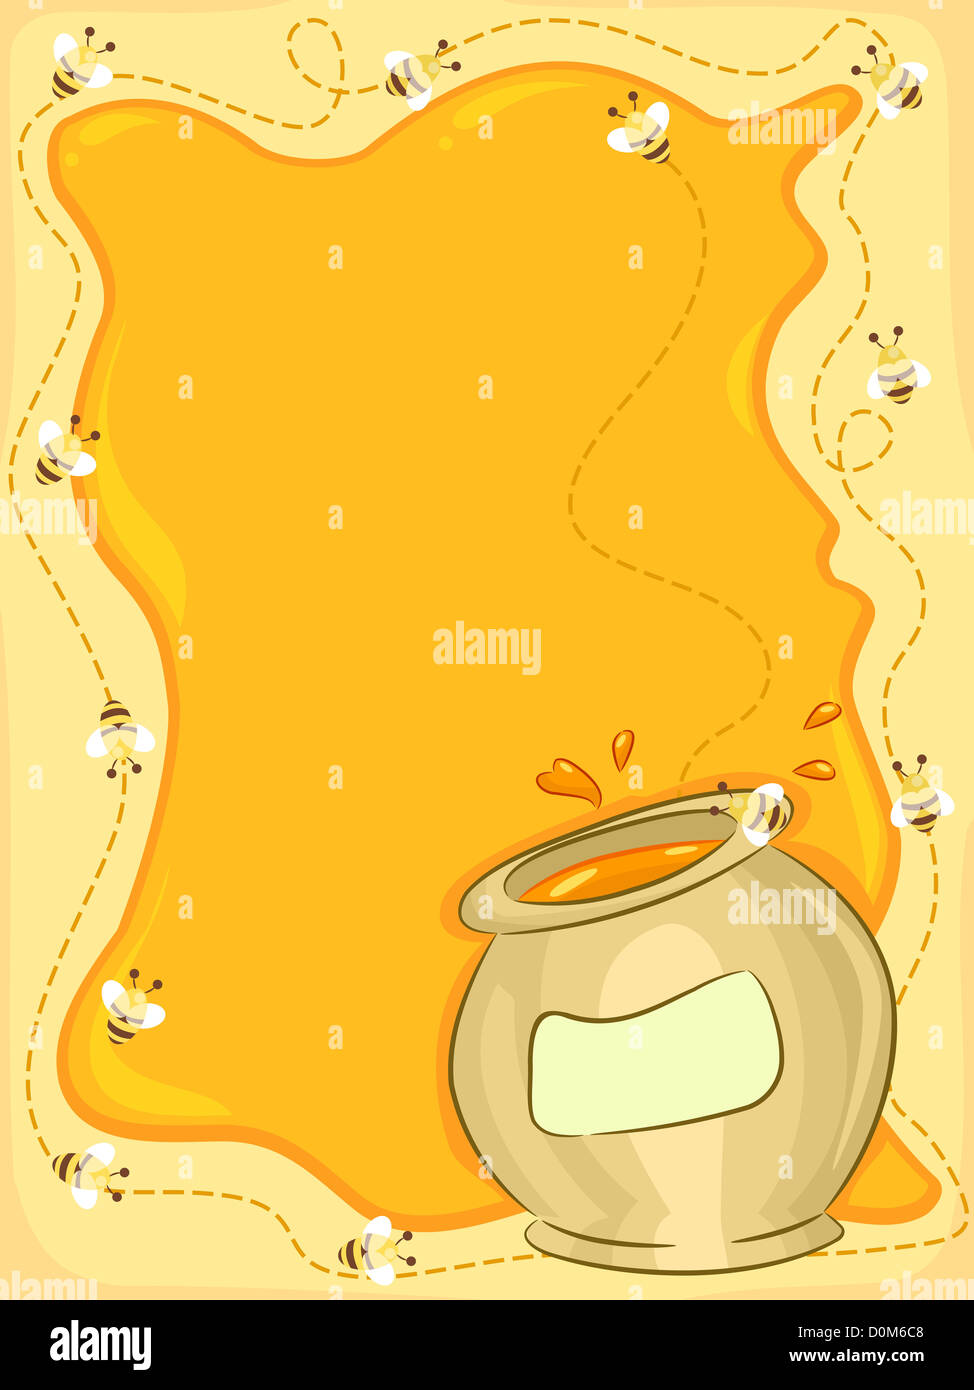 Background Illustration Featuring Honeybees Buzzing Around a Jar of Honey Stock Photo